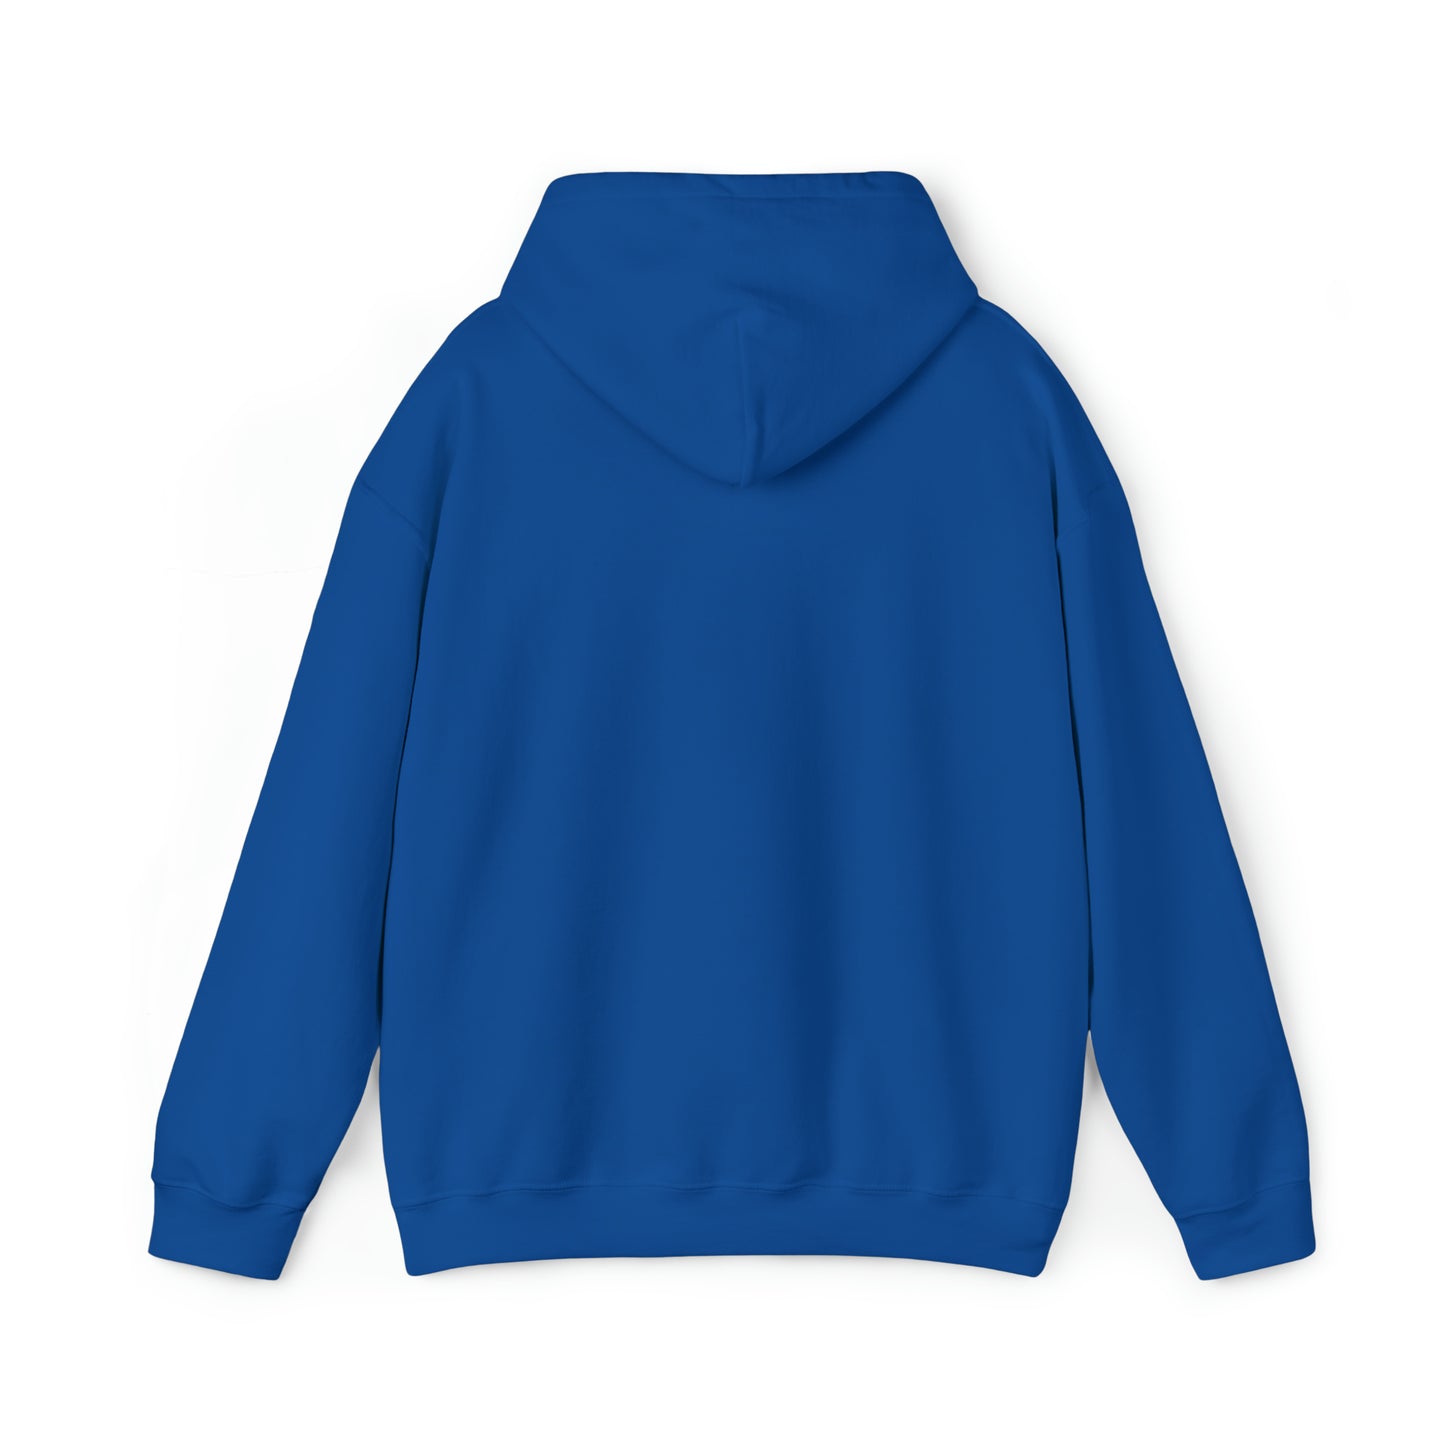 SocialDogg Unisex Heavy Blend™ Hooded Sweatshirt